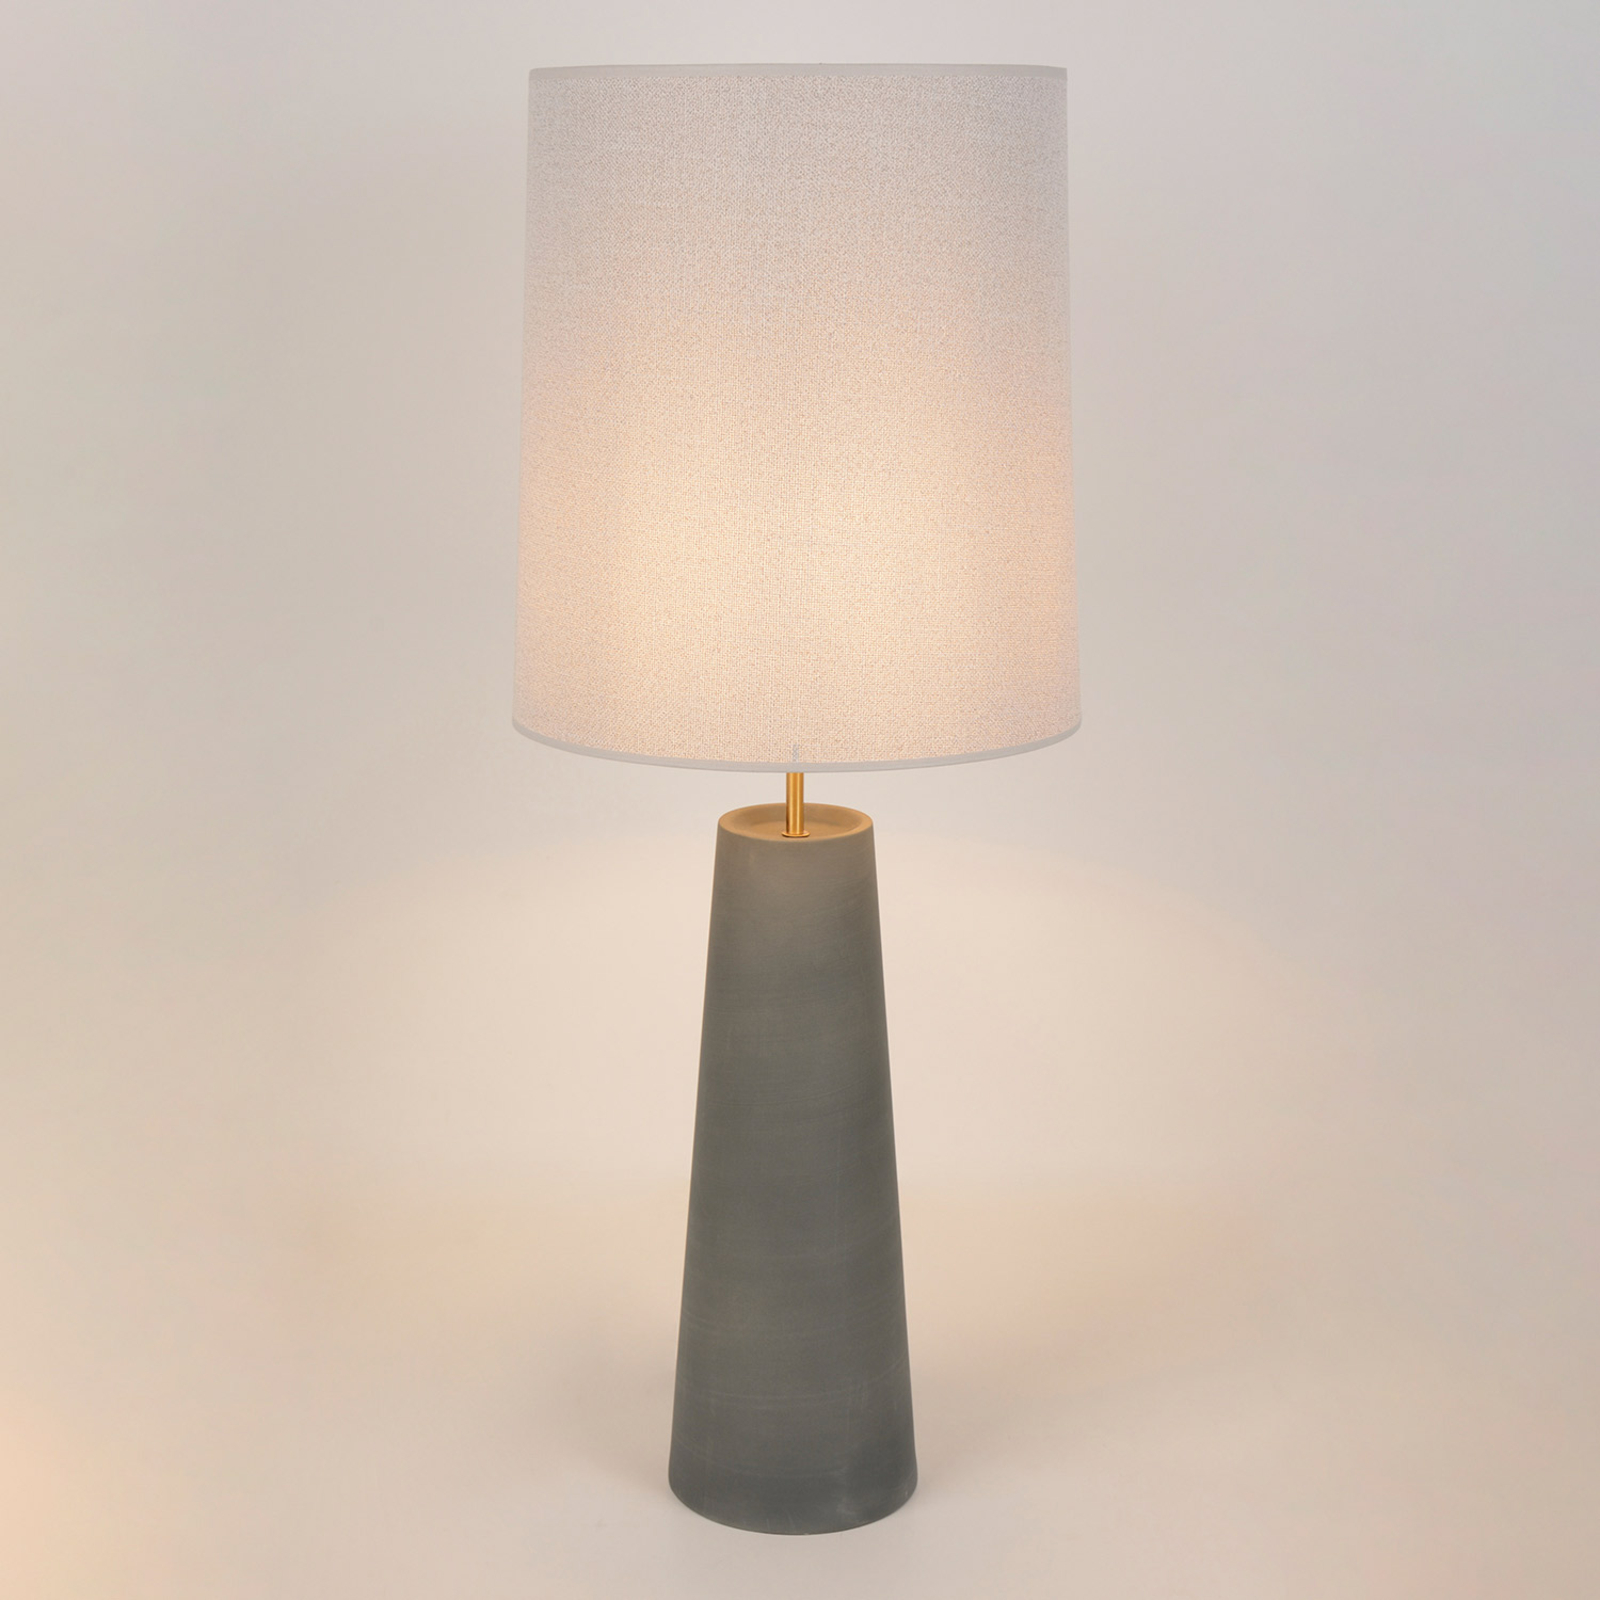 MARKET SET Cosiness table lamp, ceramic base grey